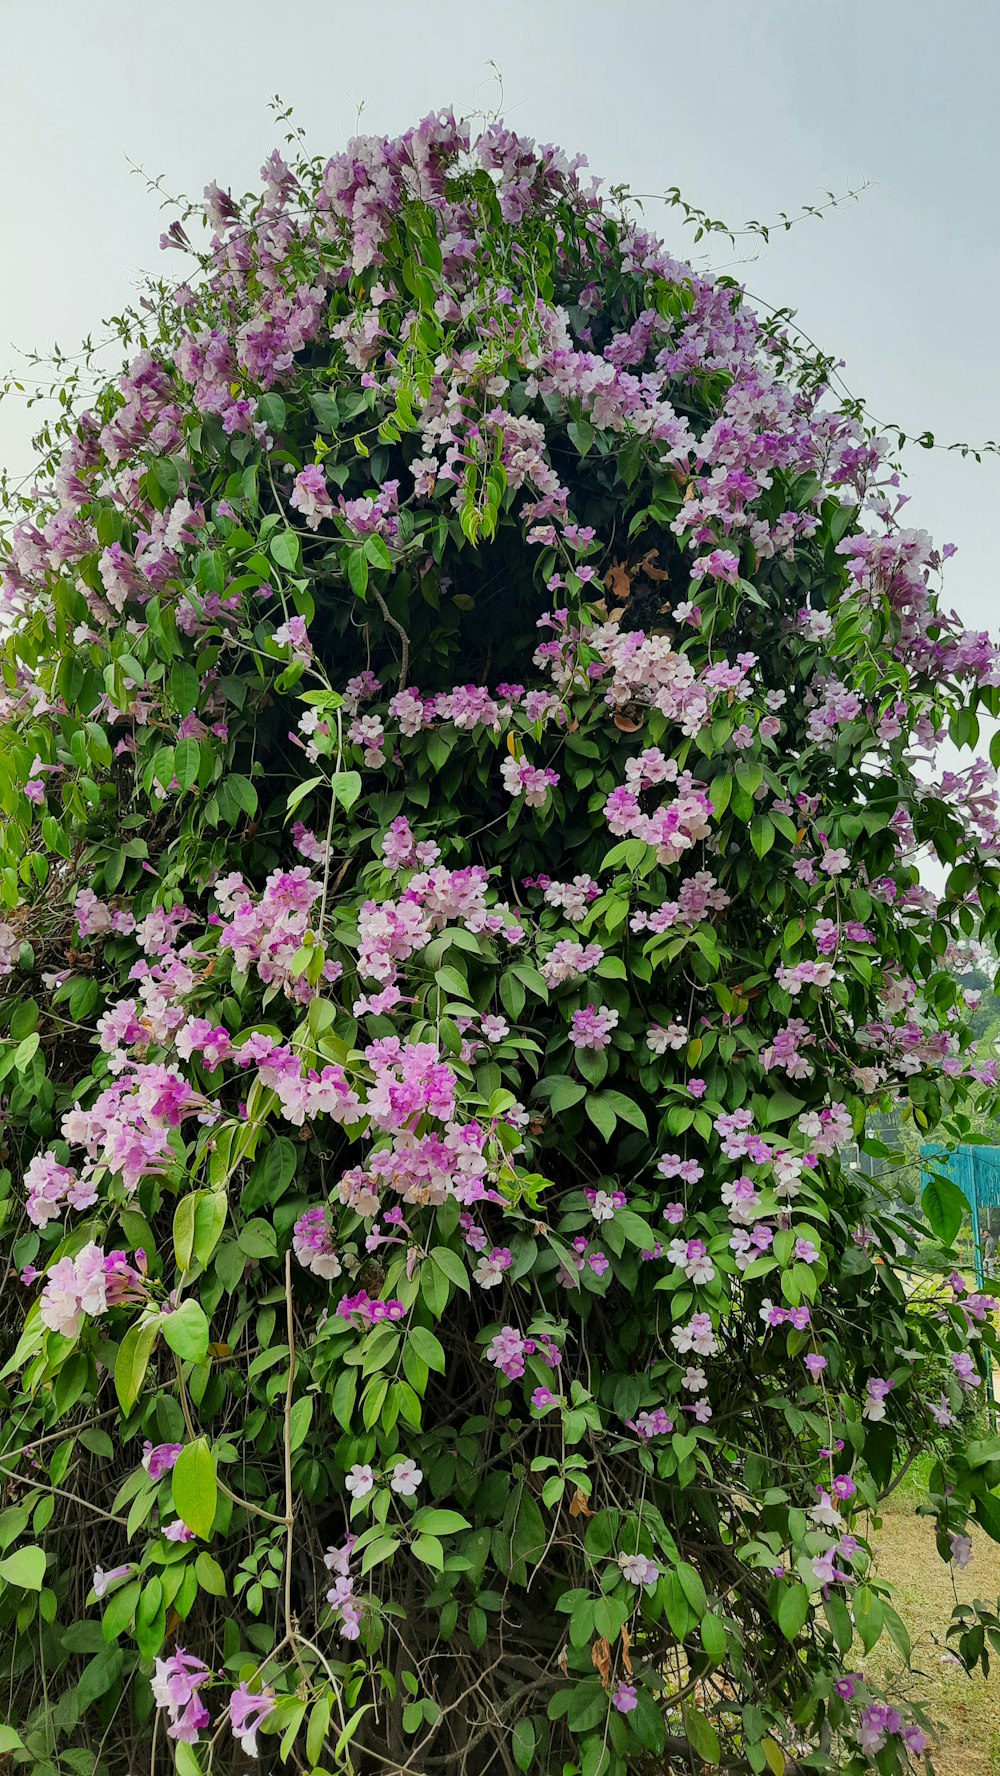 a bush with purple flowers growing on it